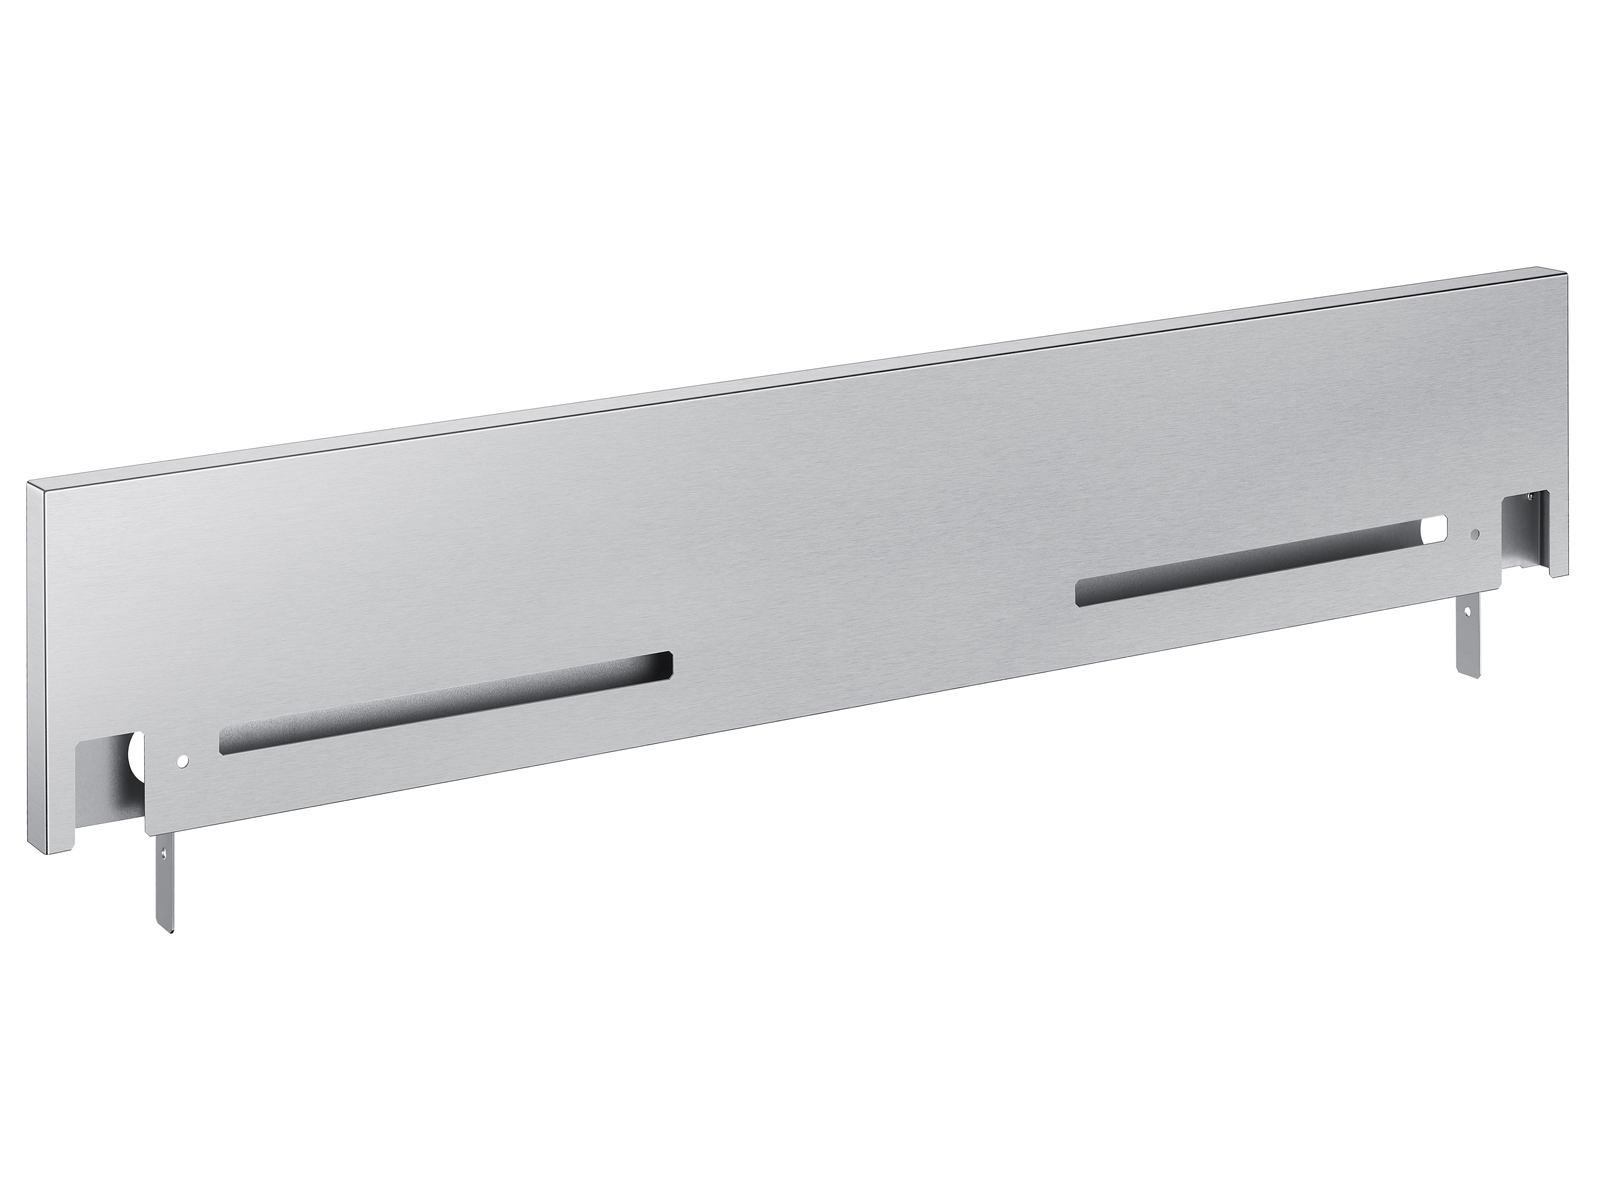 Thumbnail image of 4” Backguard for 30” Slide in Range in Stainless Steel